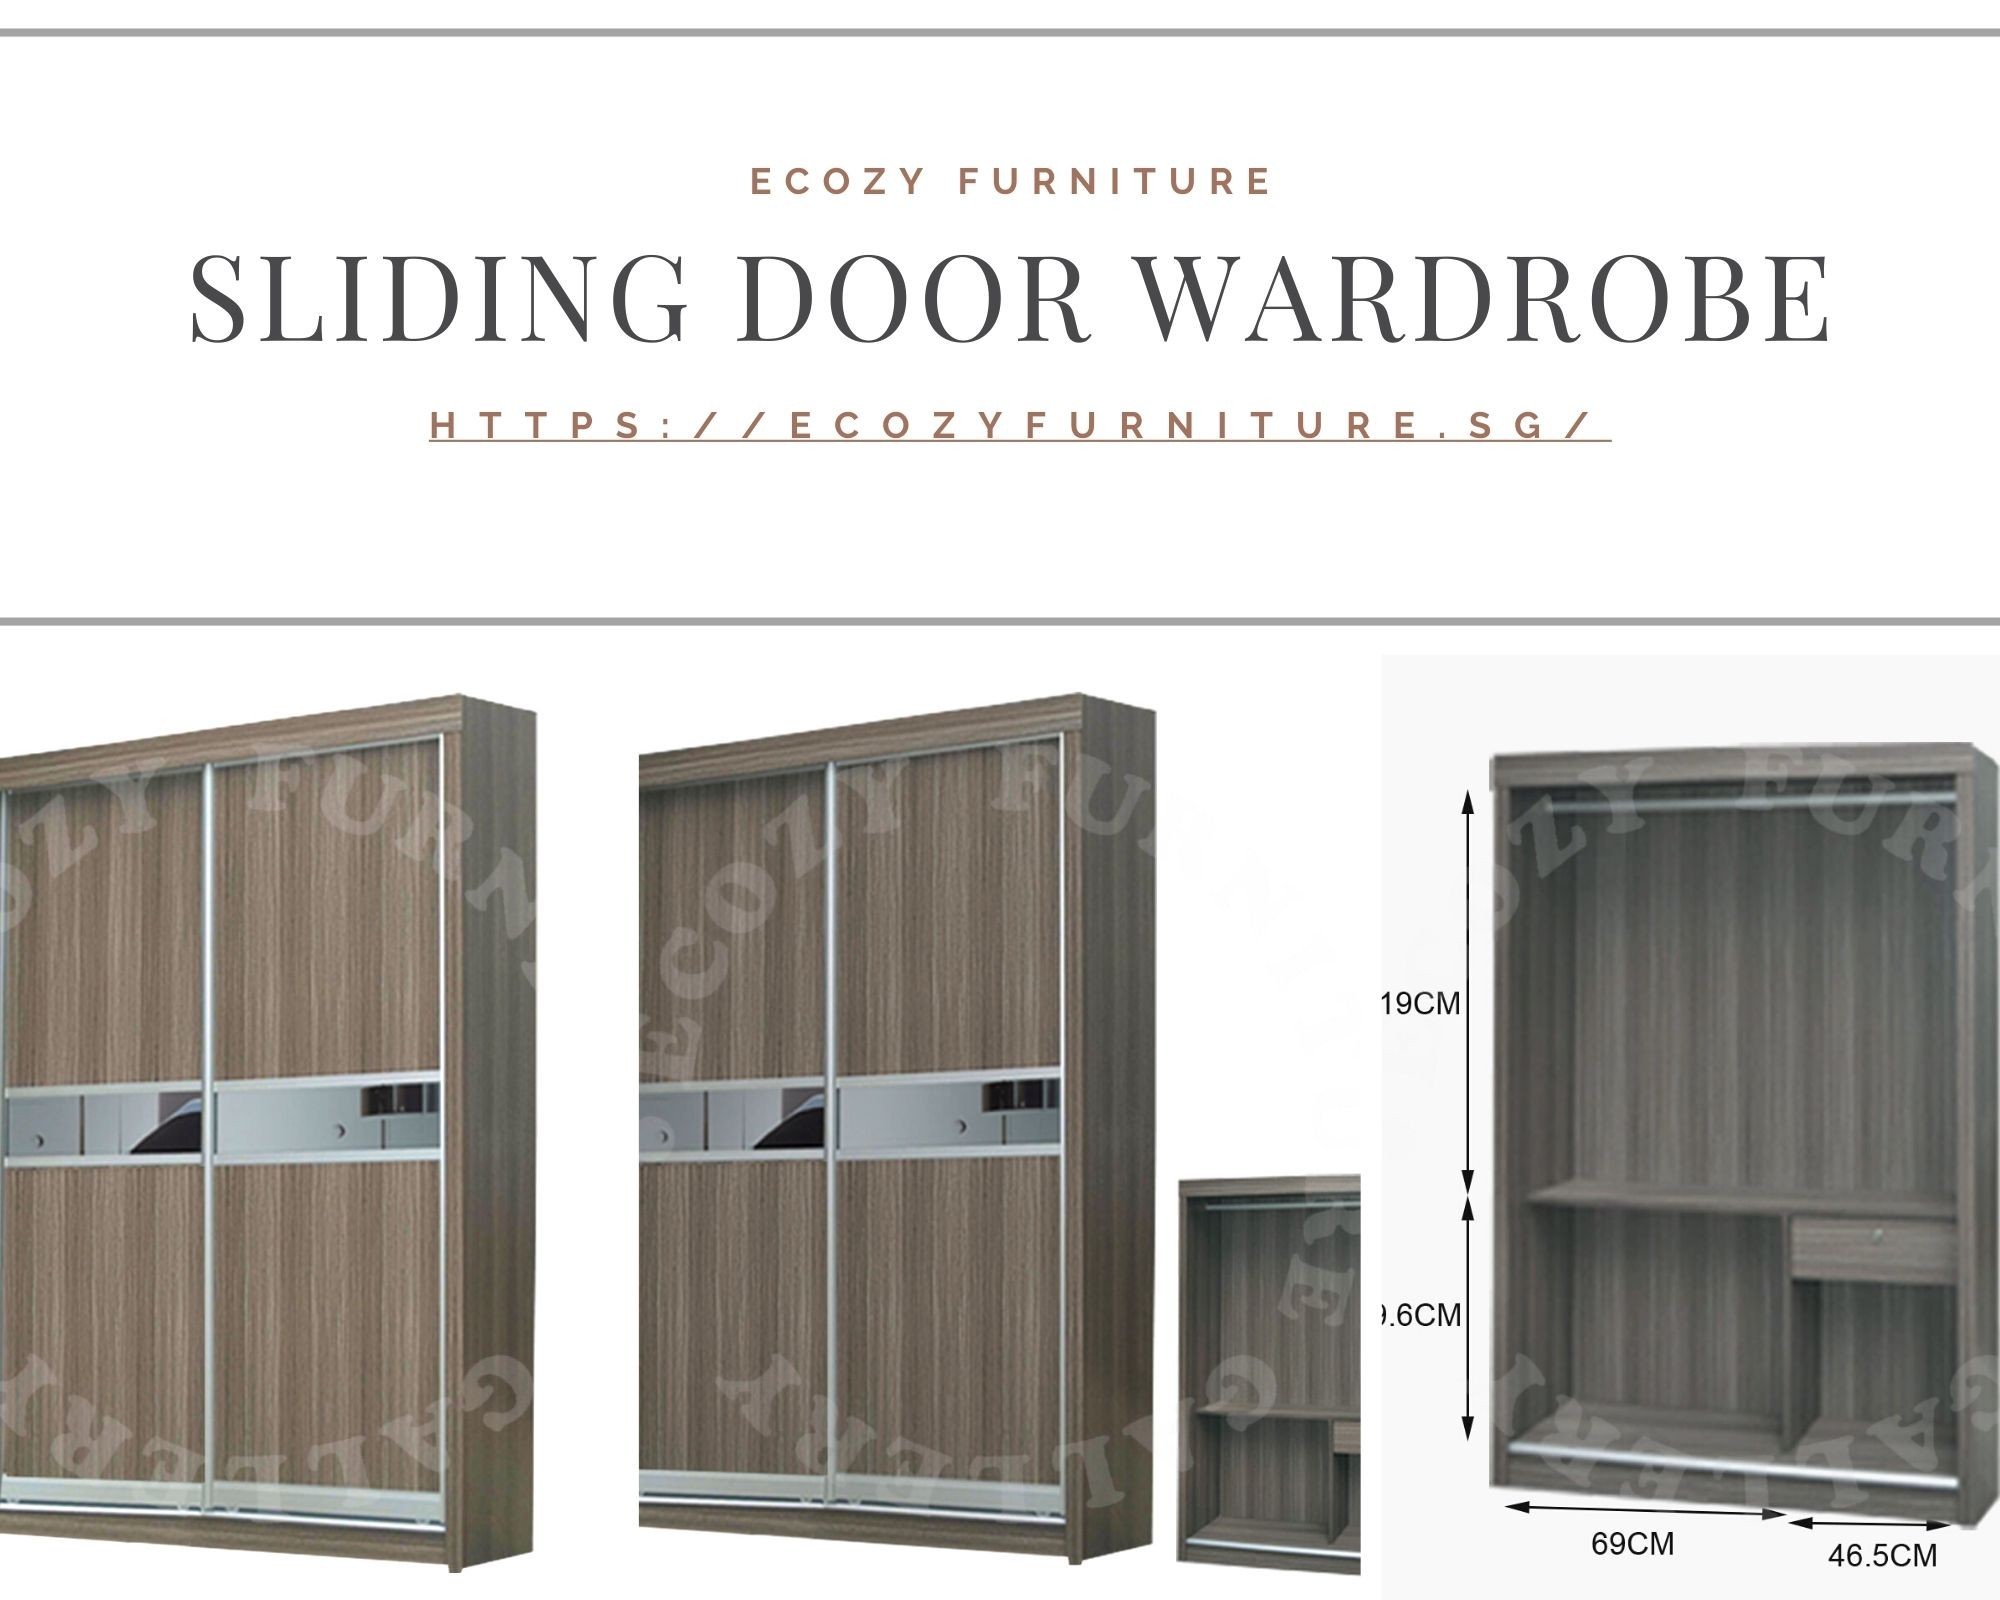 Buy Sliding Door Wardrobe Online |Ecozy Furniture